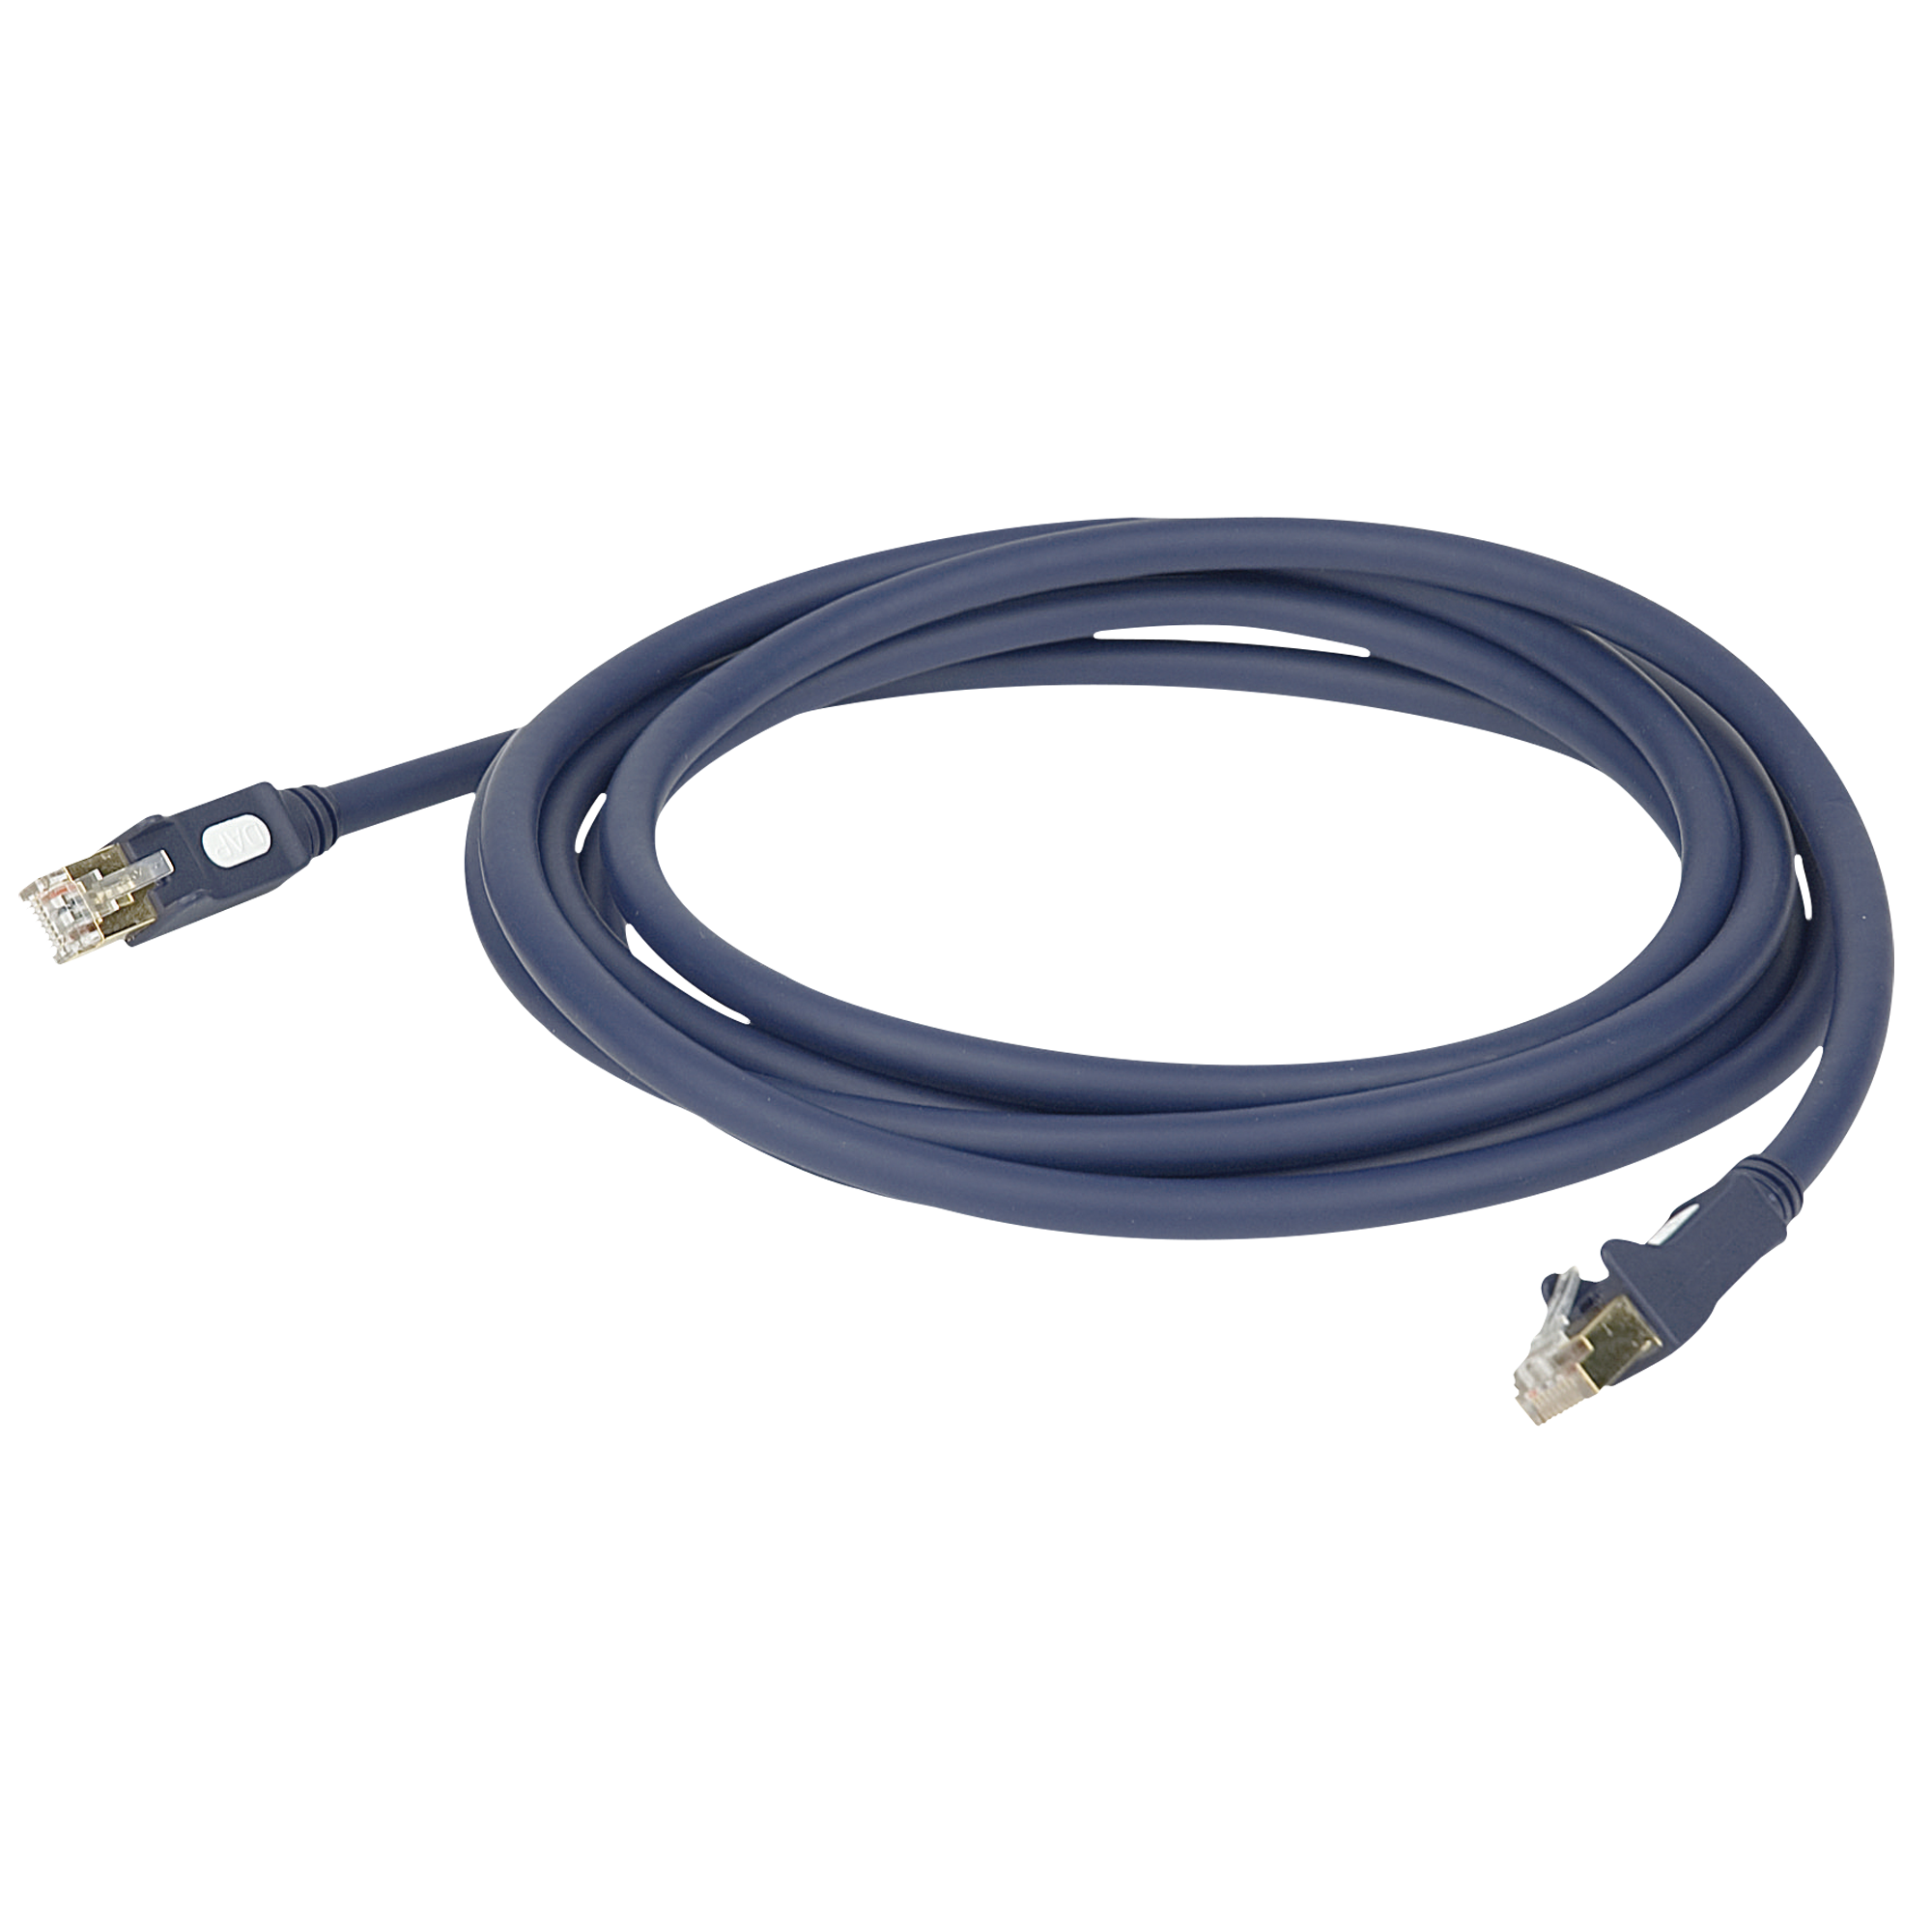 DAP FL55 - CAT5 Cable 20 m